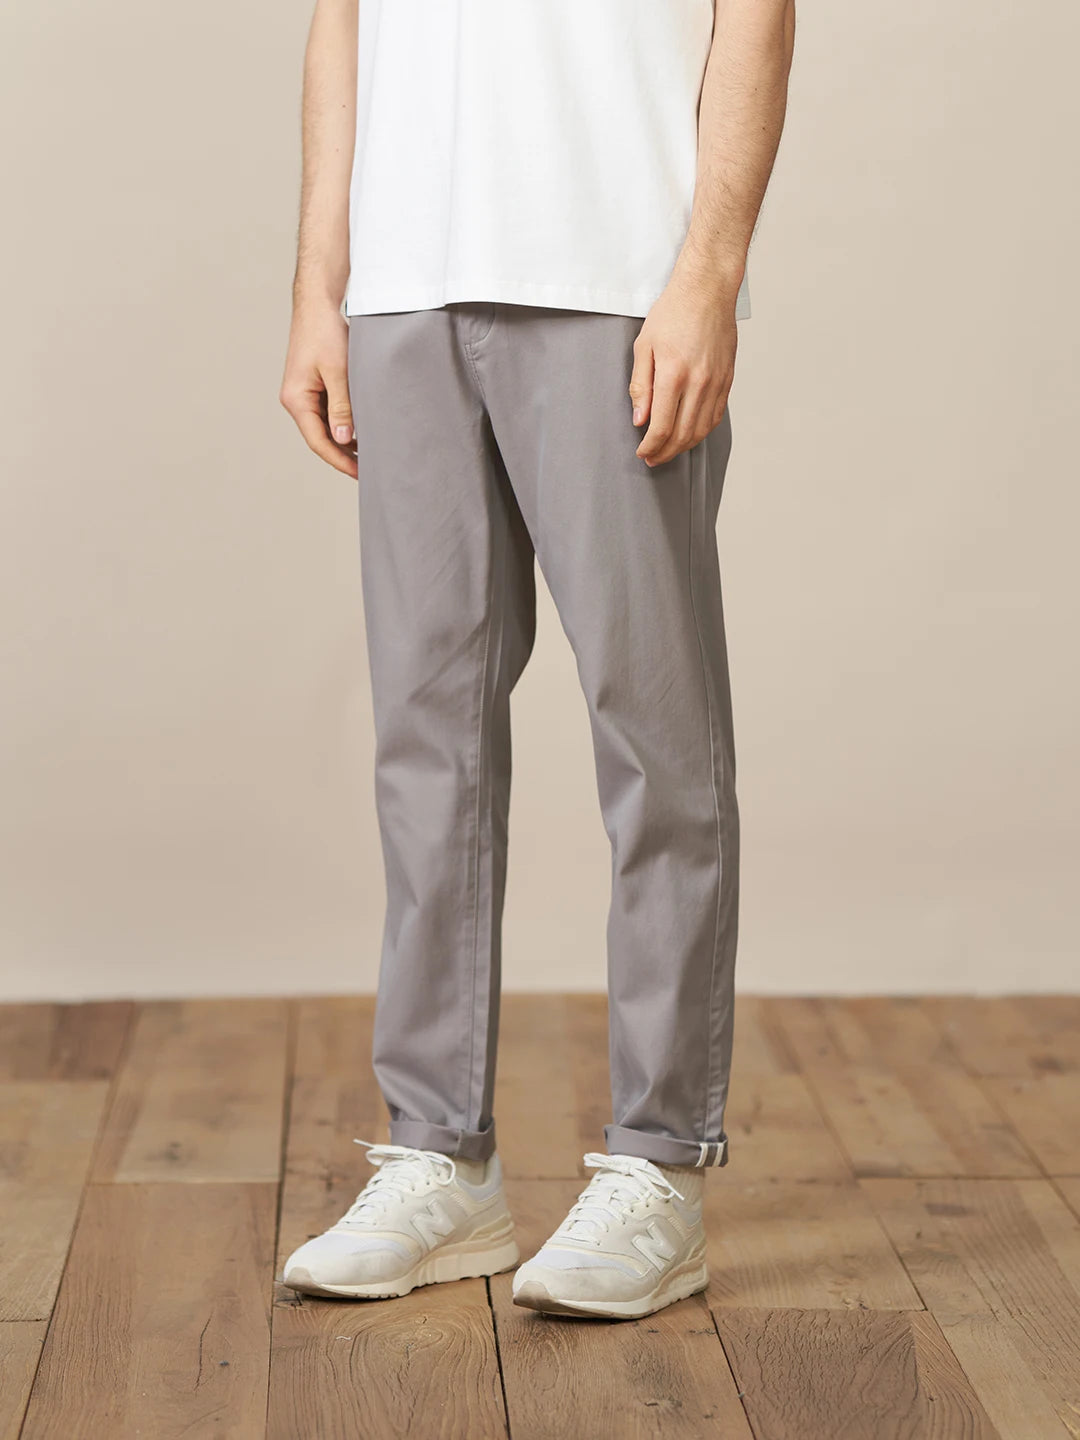 SIMWOOD Men's Spring Slim Fit Cotton Pants - Trend Zone